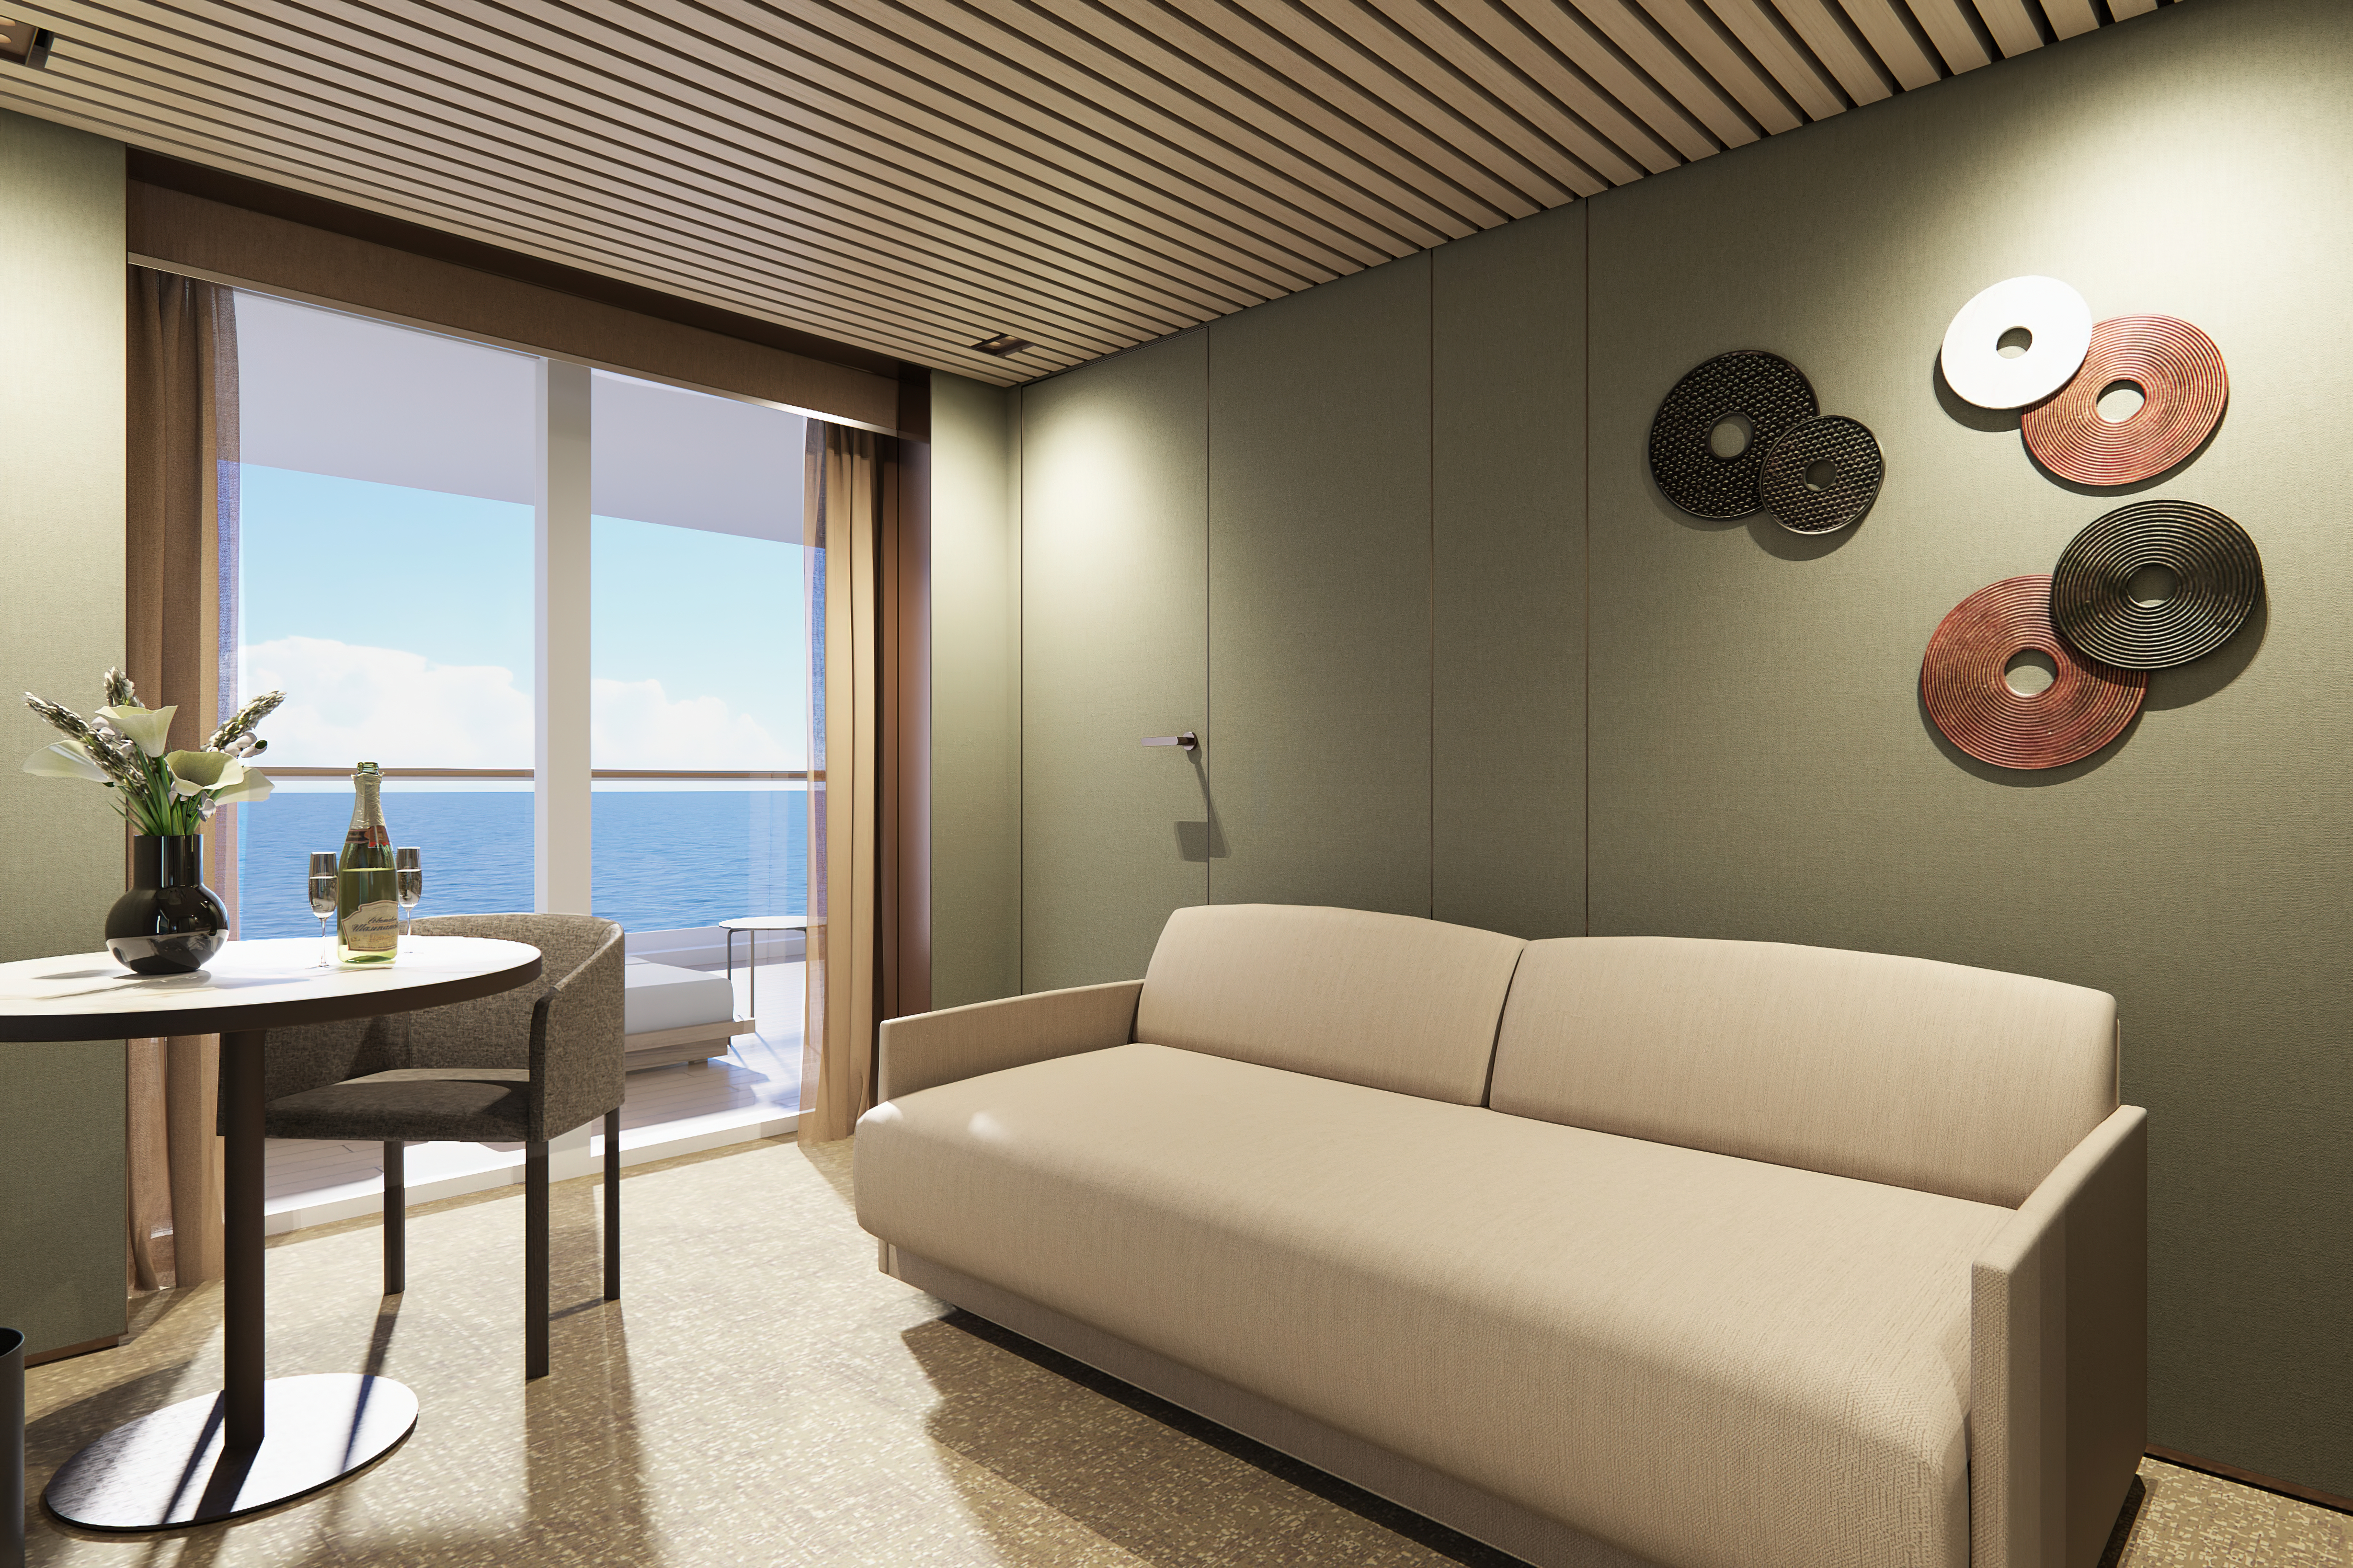 norwegianprima-thehavenaft-facingpenthousewithmasterbedroomampbalcony-livingroom-rendering.jpg